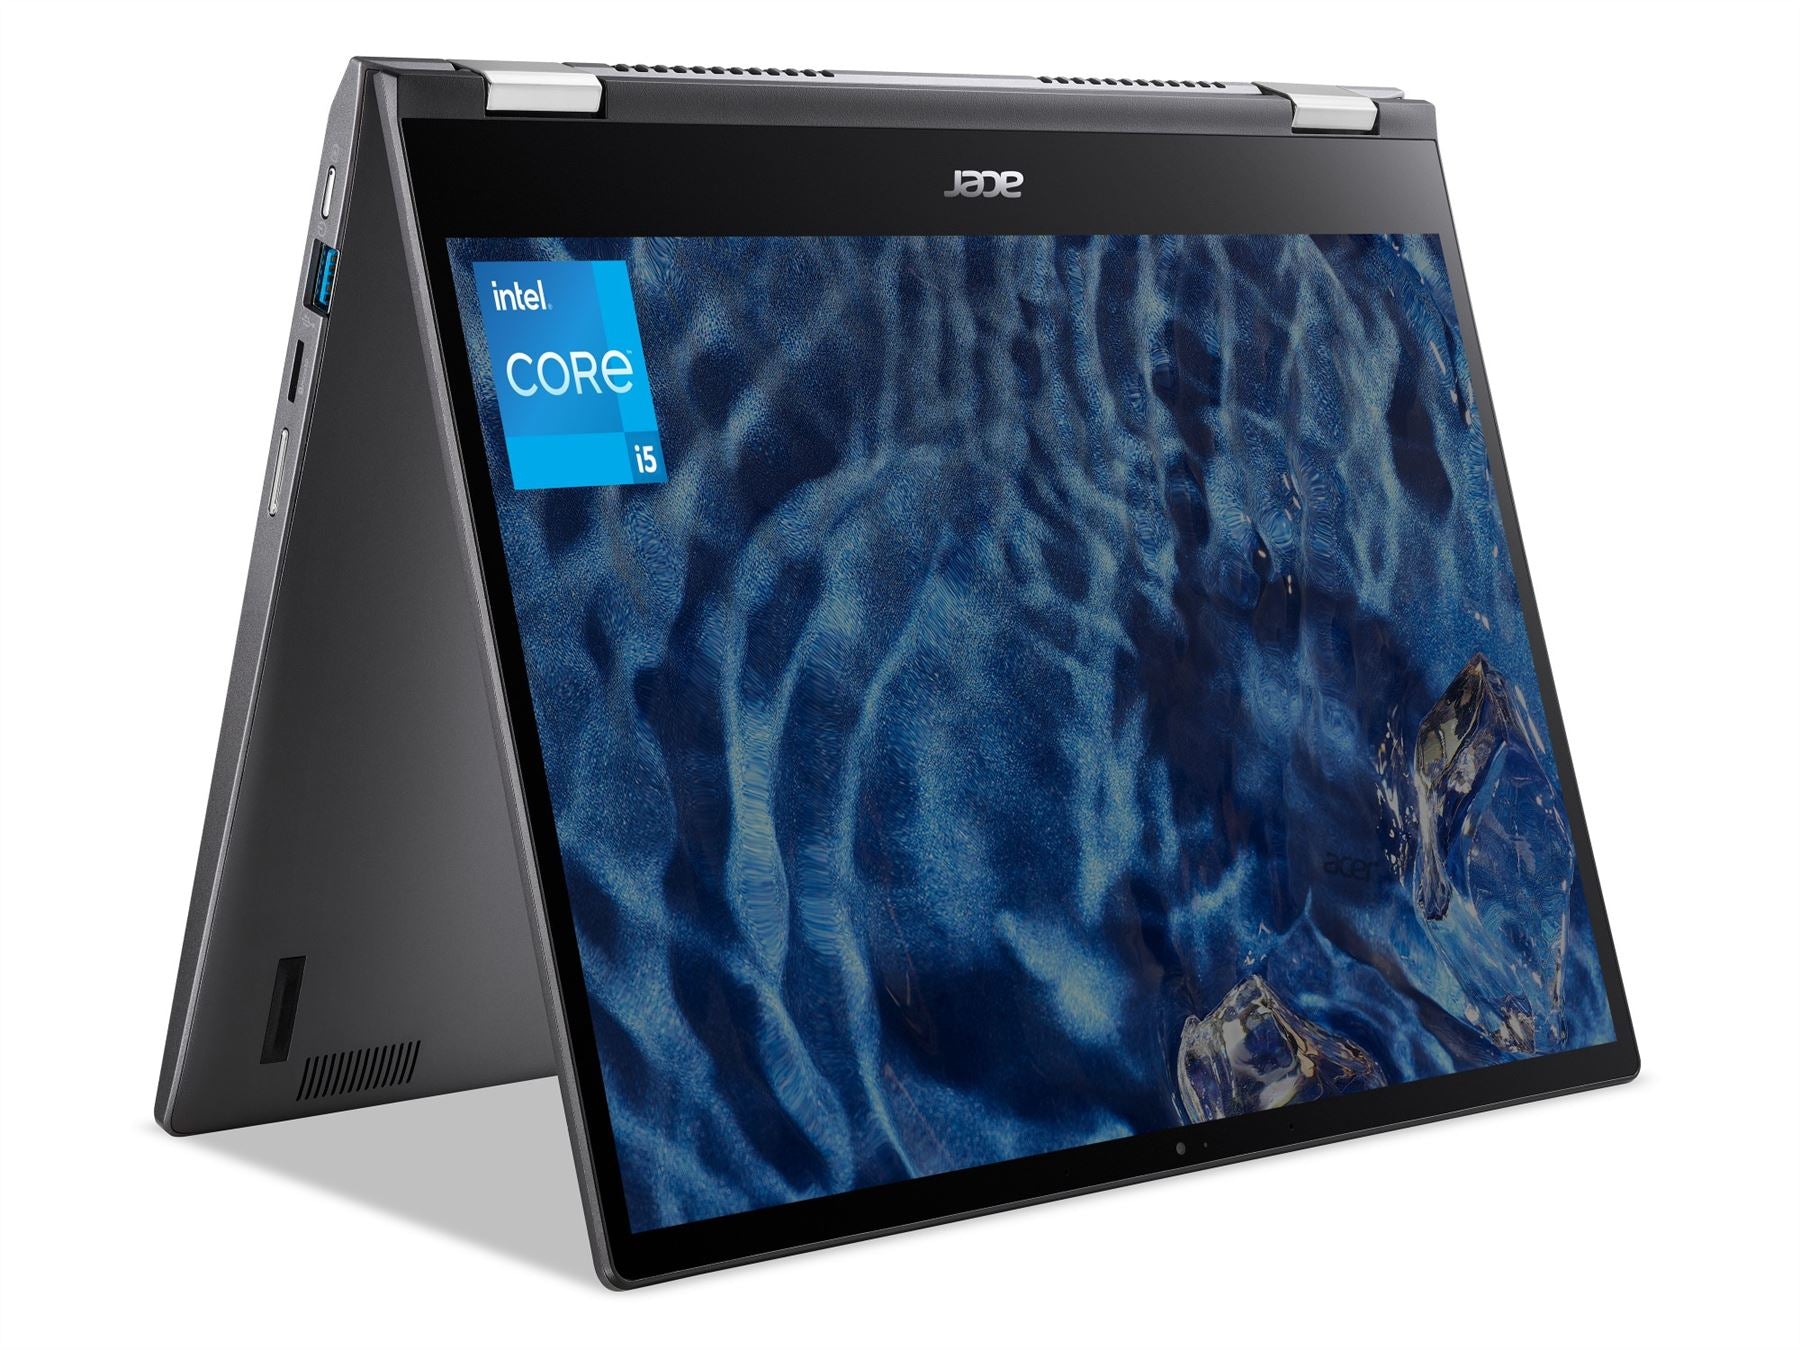 Clove Laptops Acer - Technology